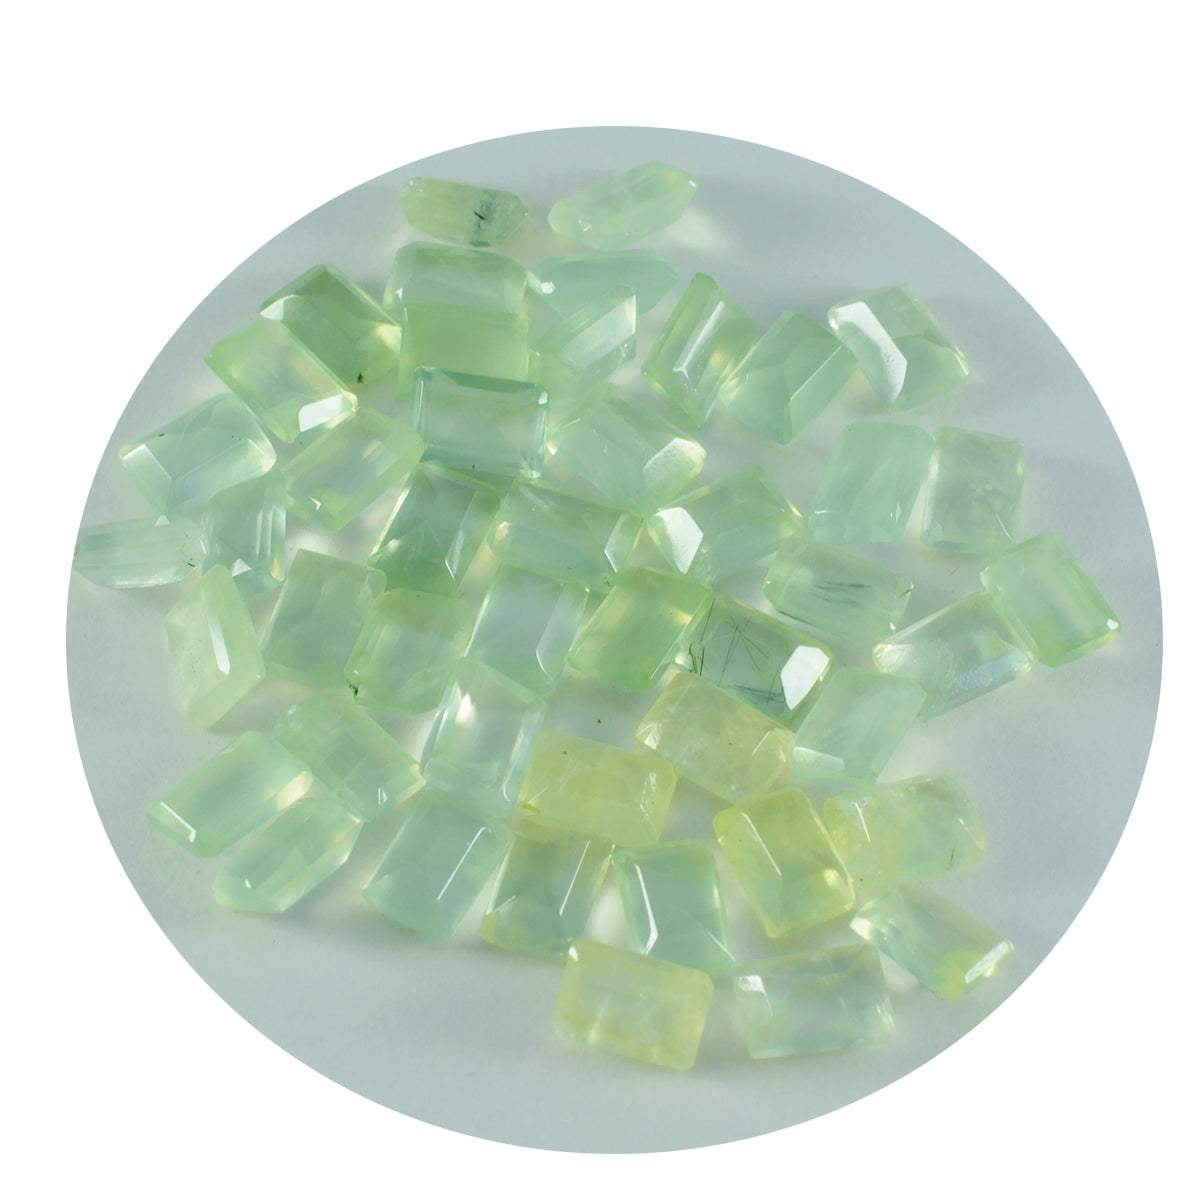 Riyogems 1PC Green Prehnite Faceted 3x5 mm Octagon Shape excellent Quality Gemstone